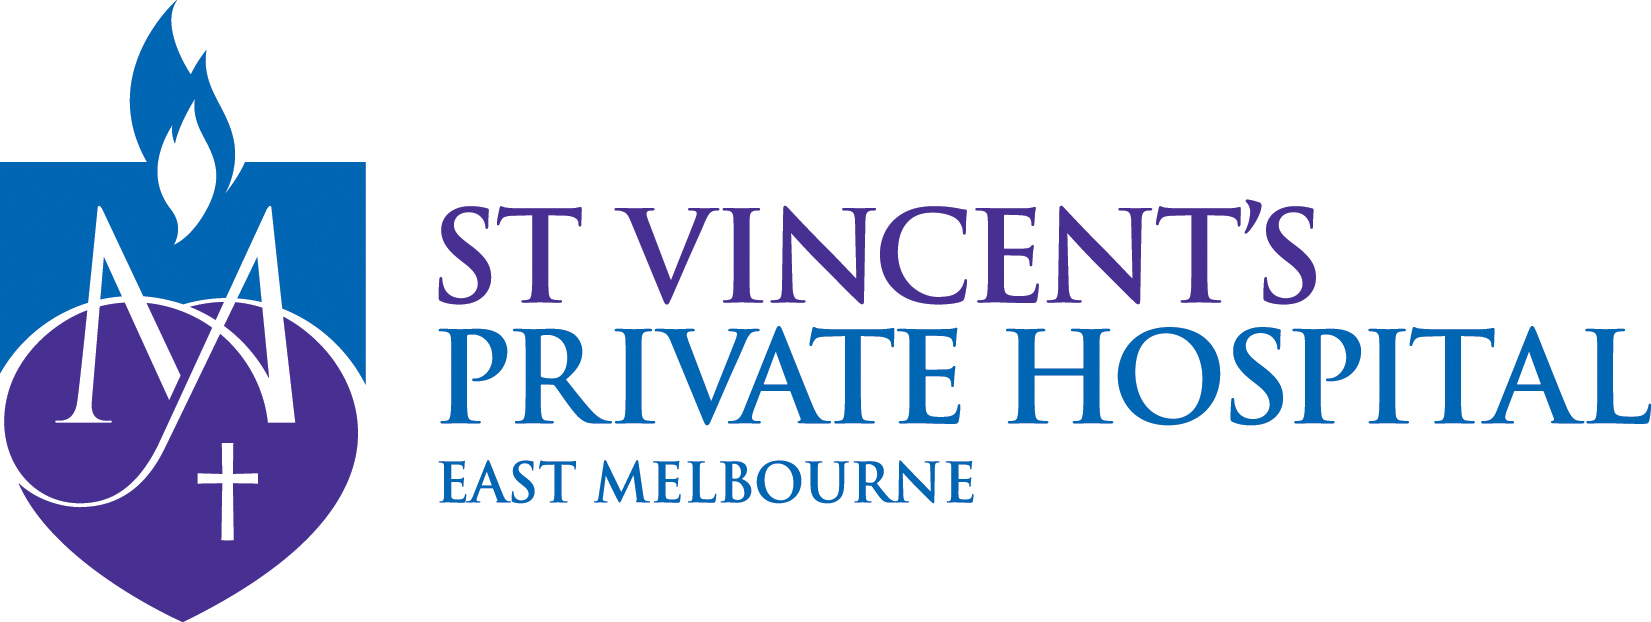 St Vincent’s Private Hospital, East Melbourne